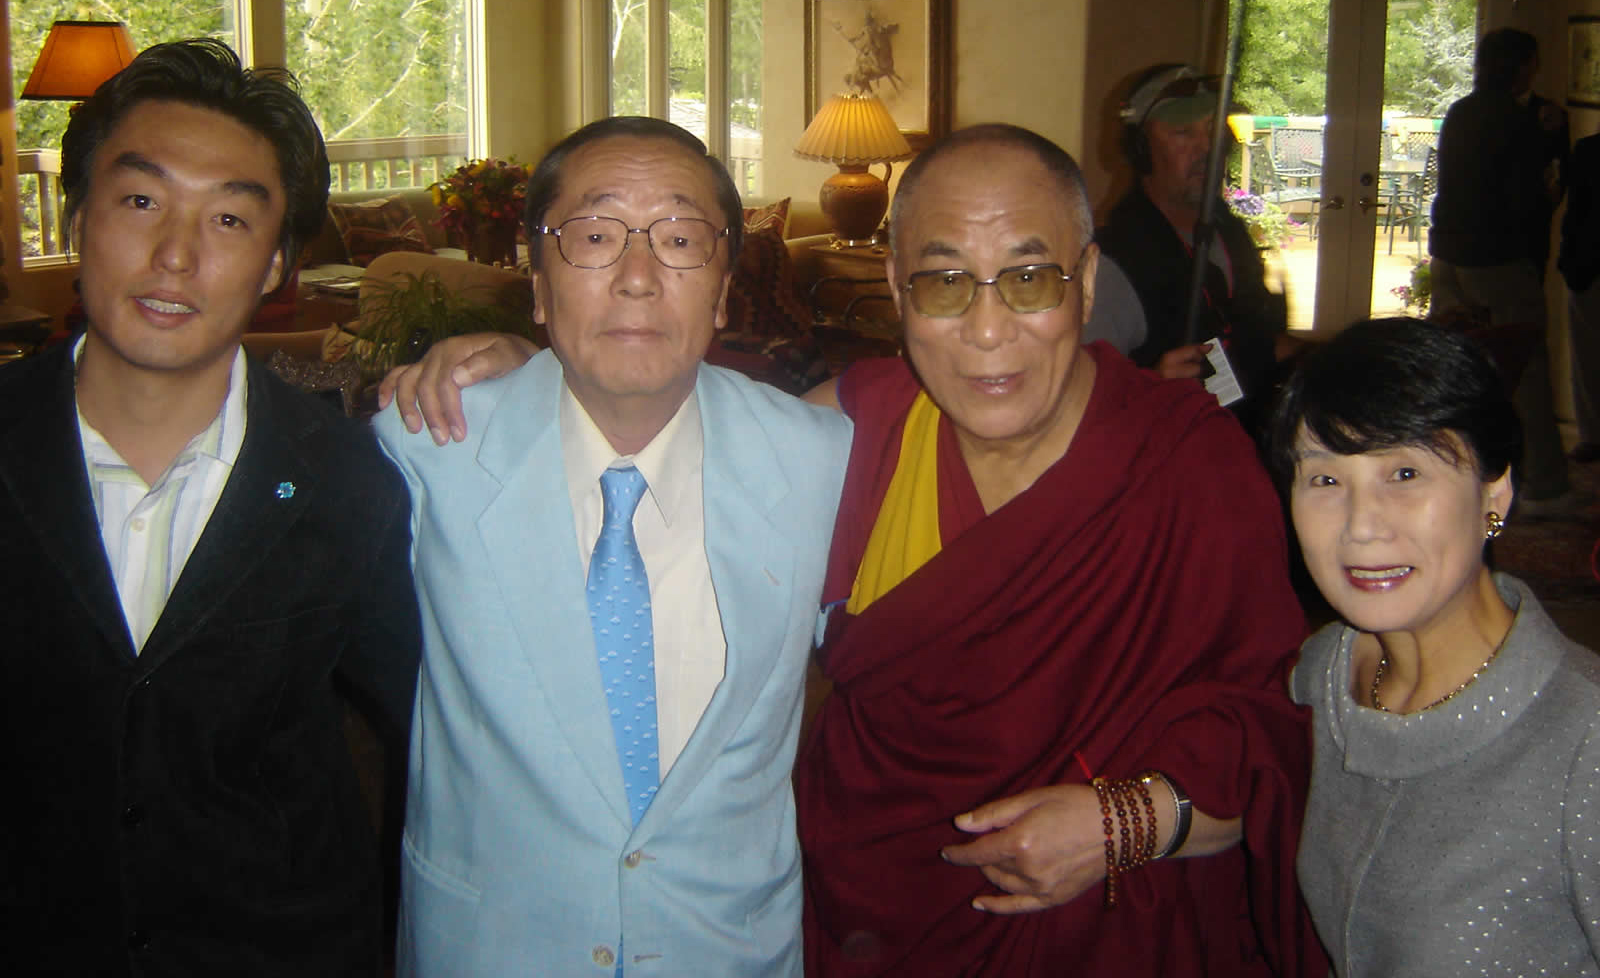 Dr. Emoto and The Dalai Lama